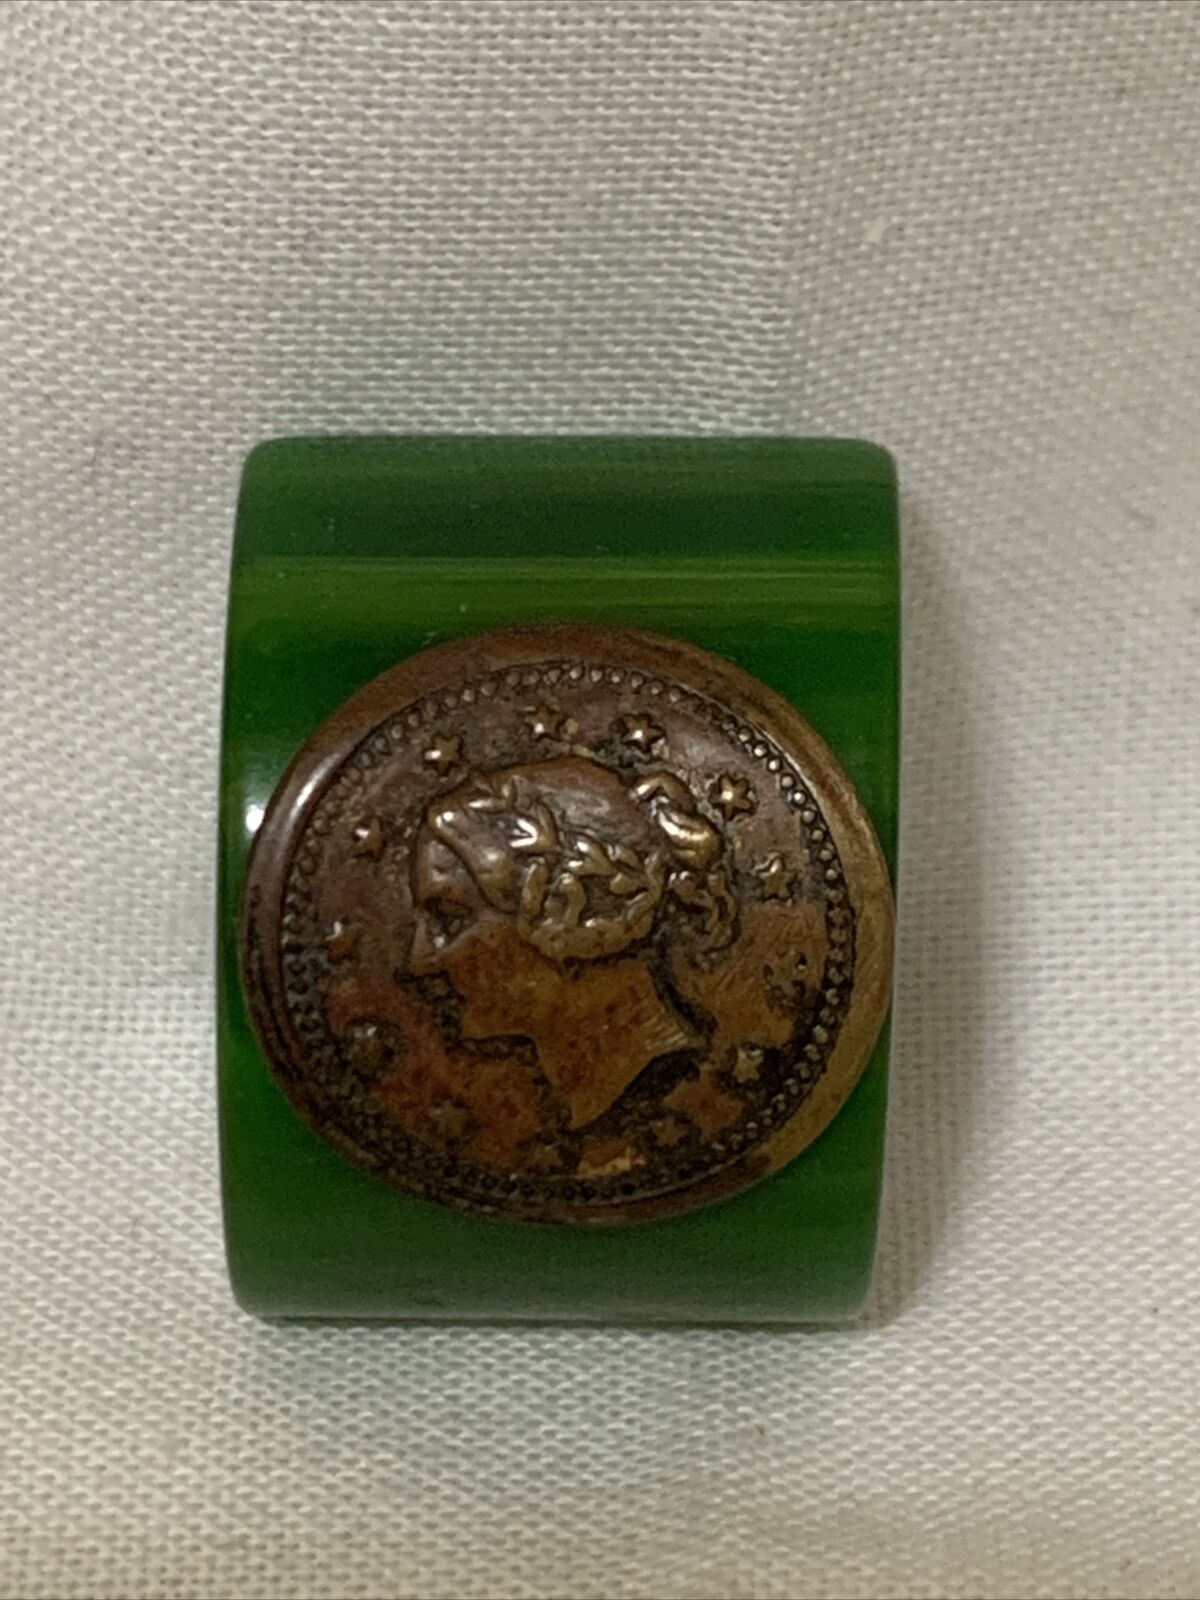 Antique Valuations: Antique Bakelite button￼ Of Coin